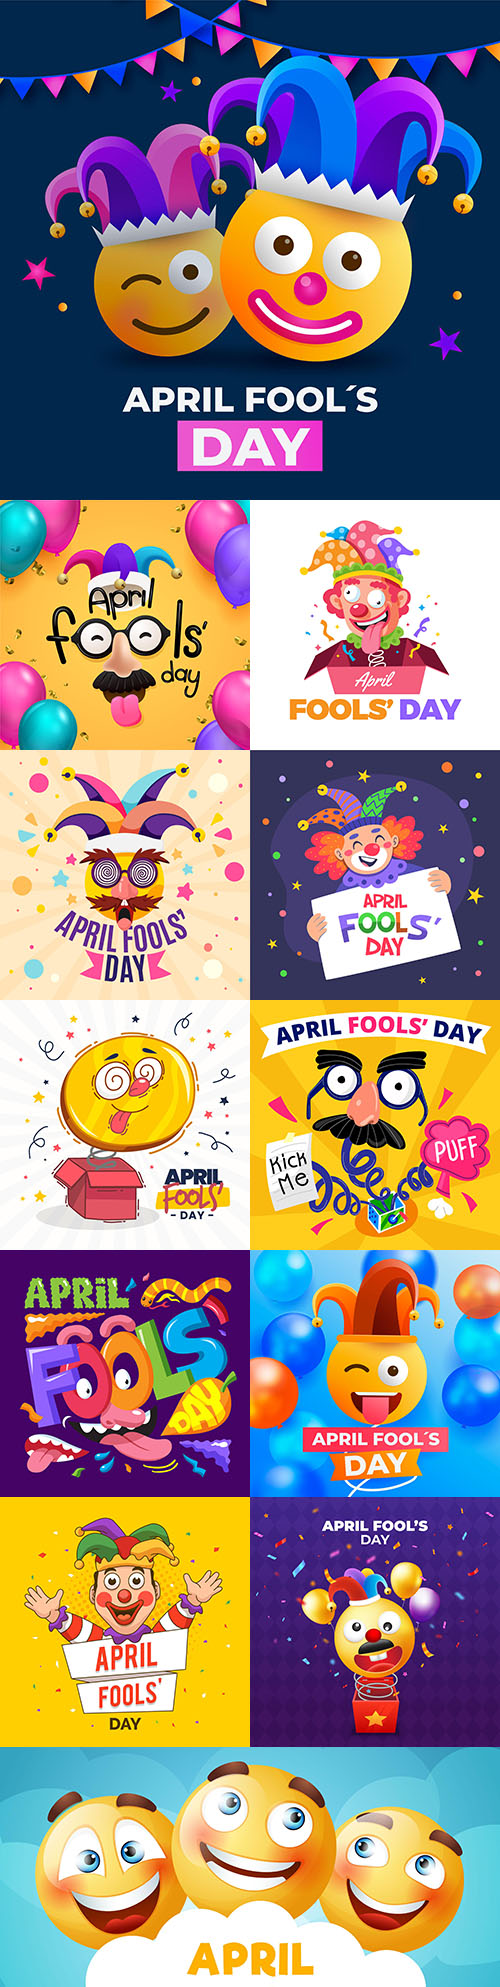 Fools day and April 1 illustration flat design
